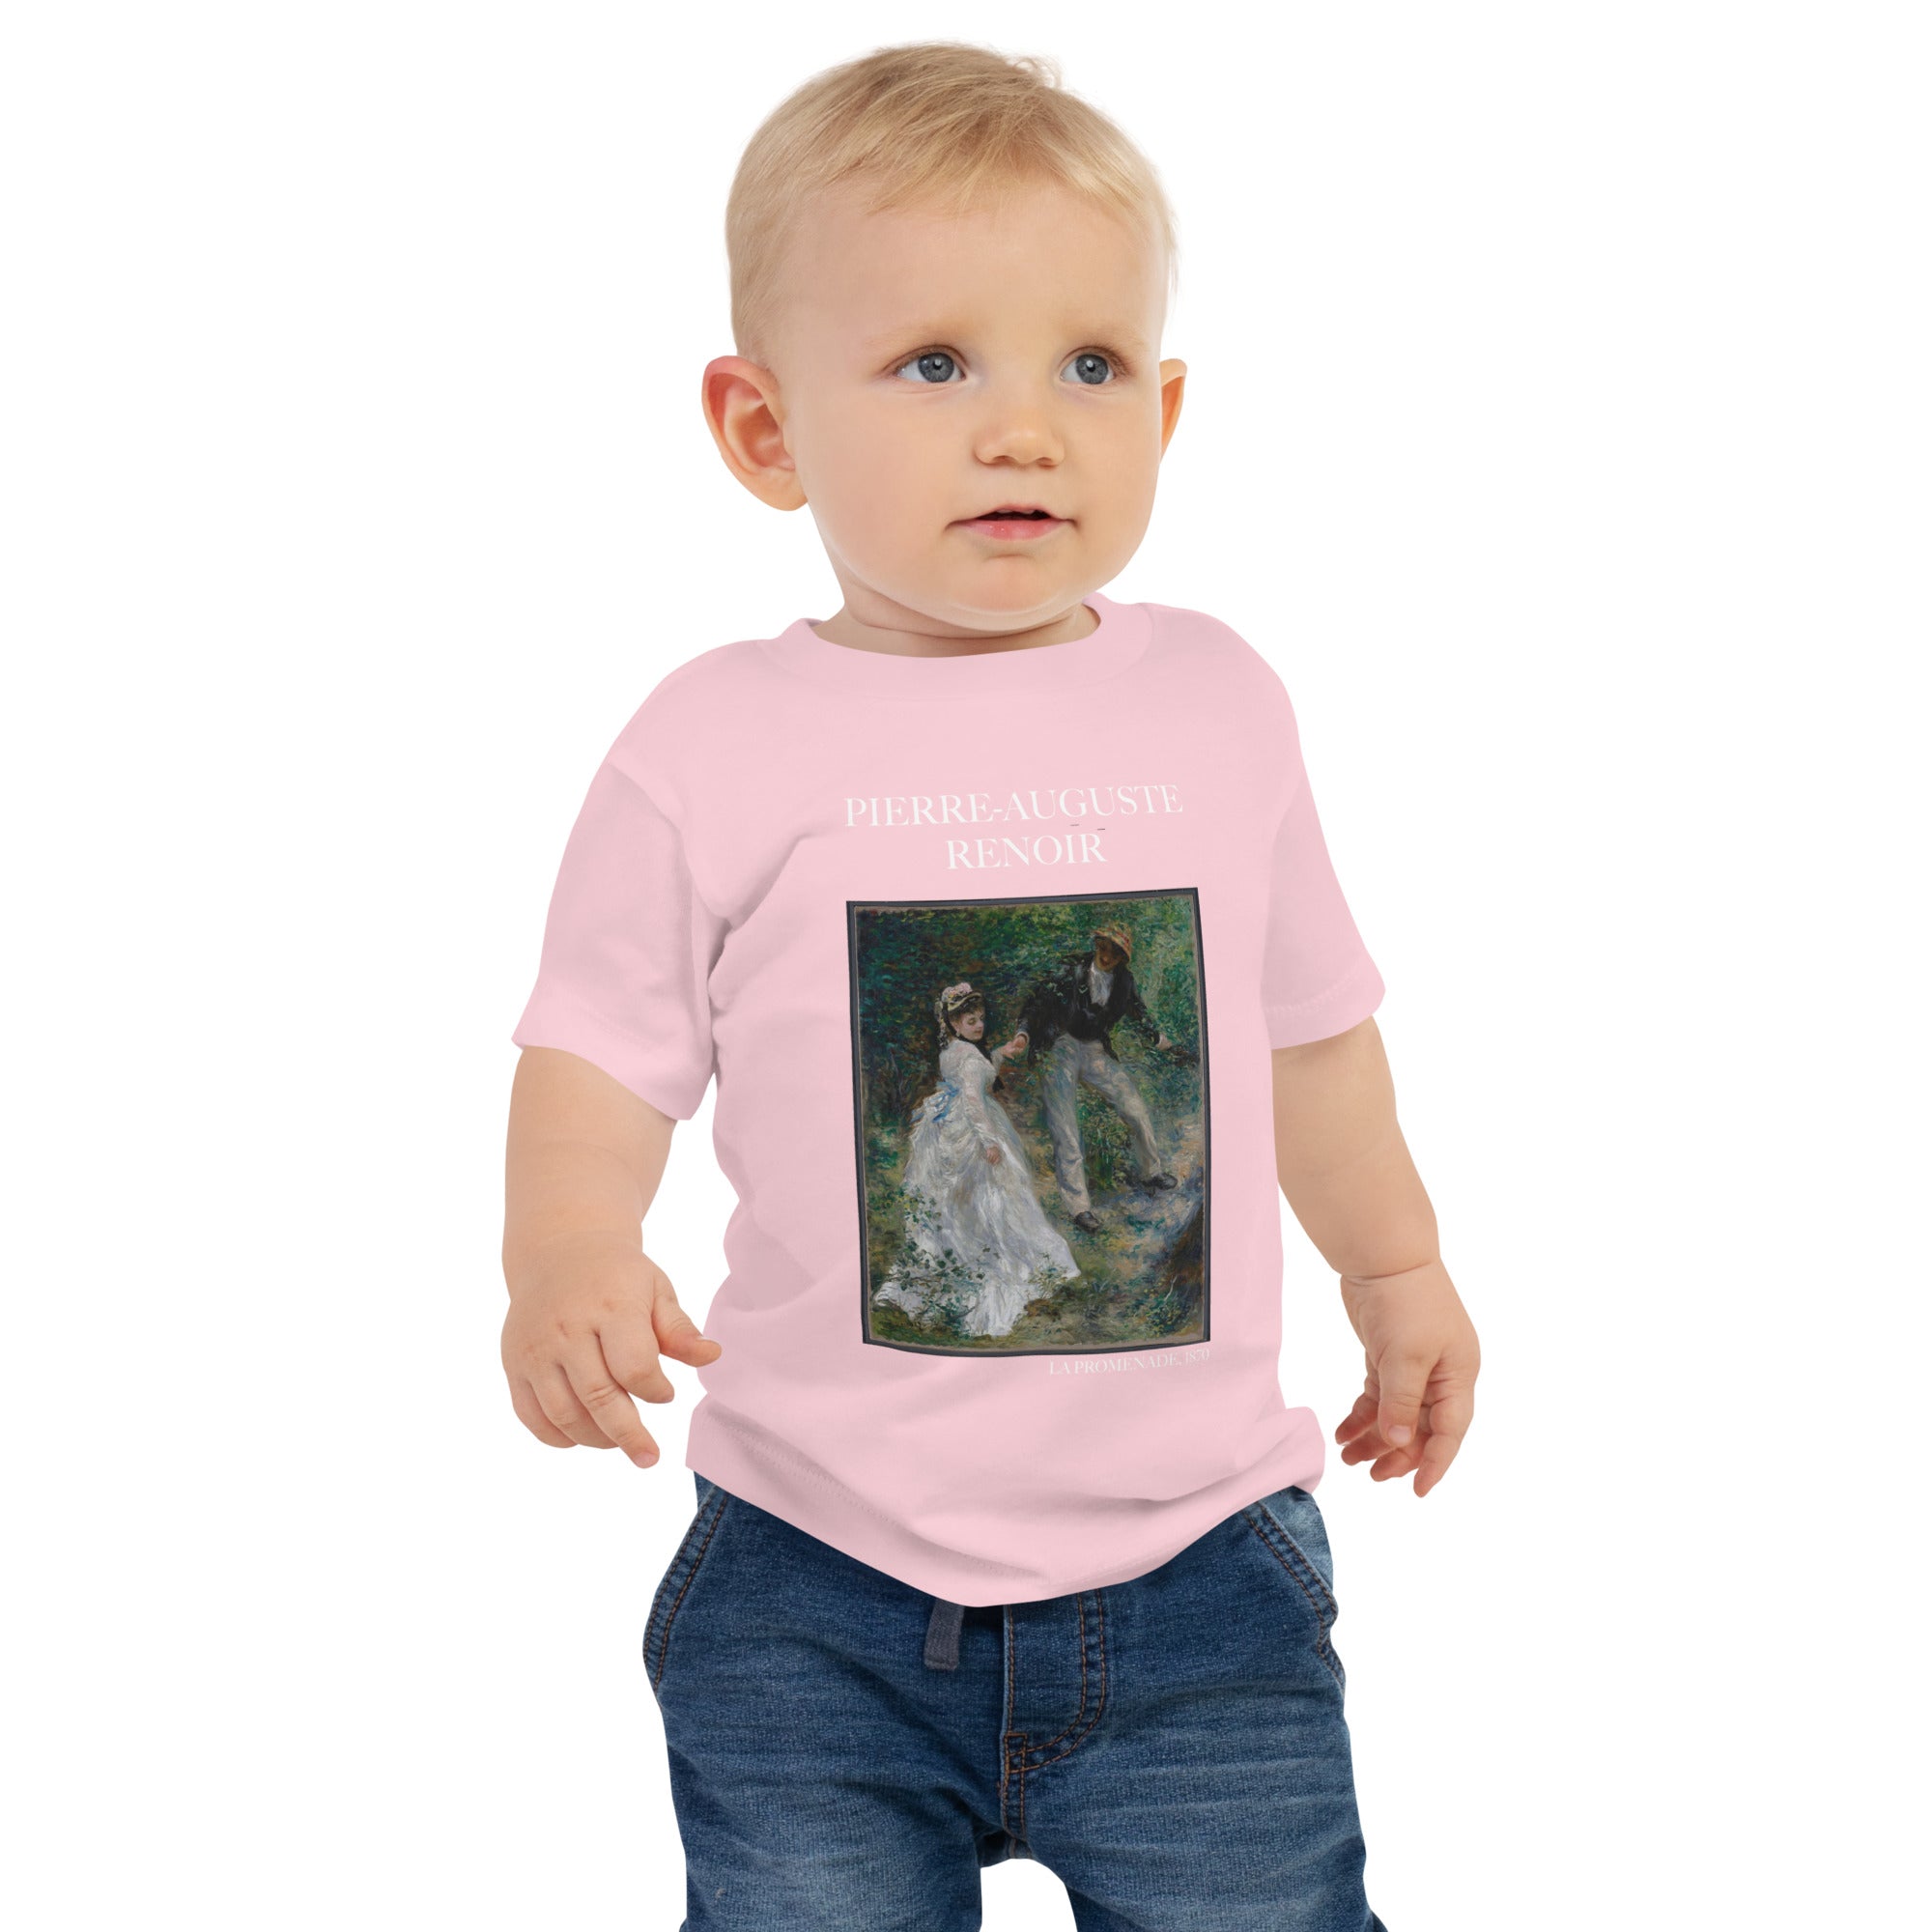 Pierre-Auguste Renoir 'La Promenade' Famous Painting Baby Staple T-Shirt | Premium Baby Art Tee